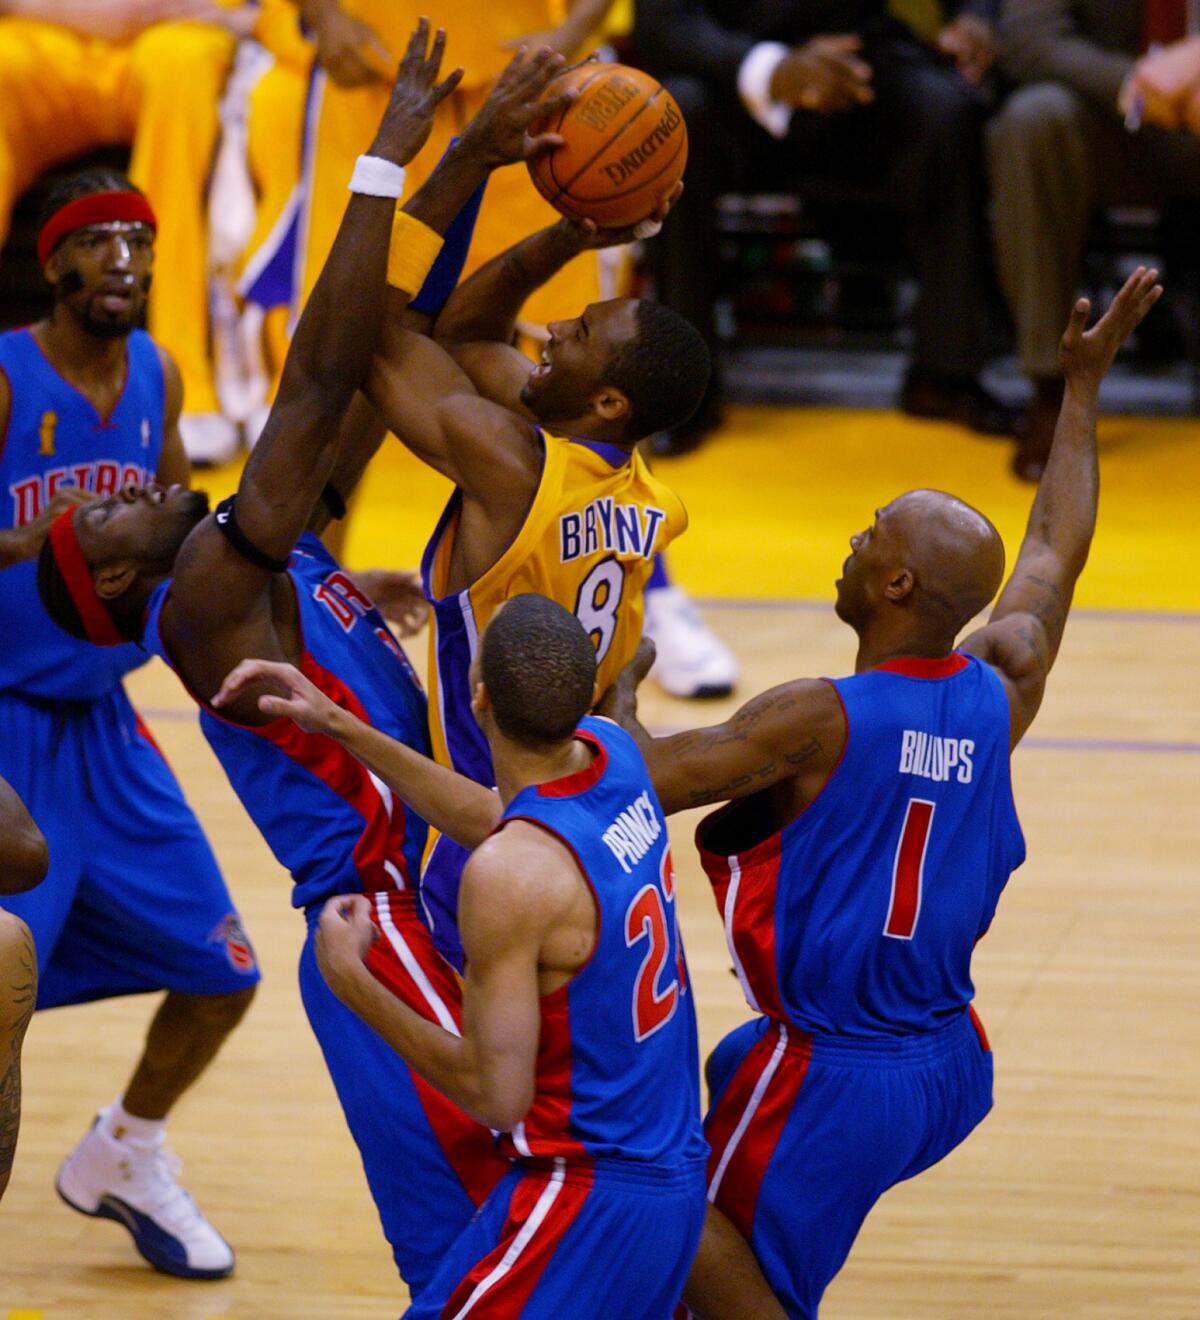 Kobe forces a shot against the tough defense of Detroit Pistons. (Los Angeles Times)